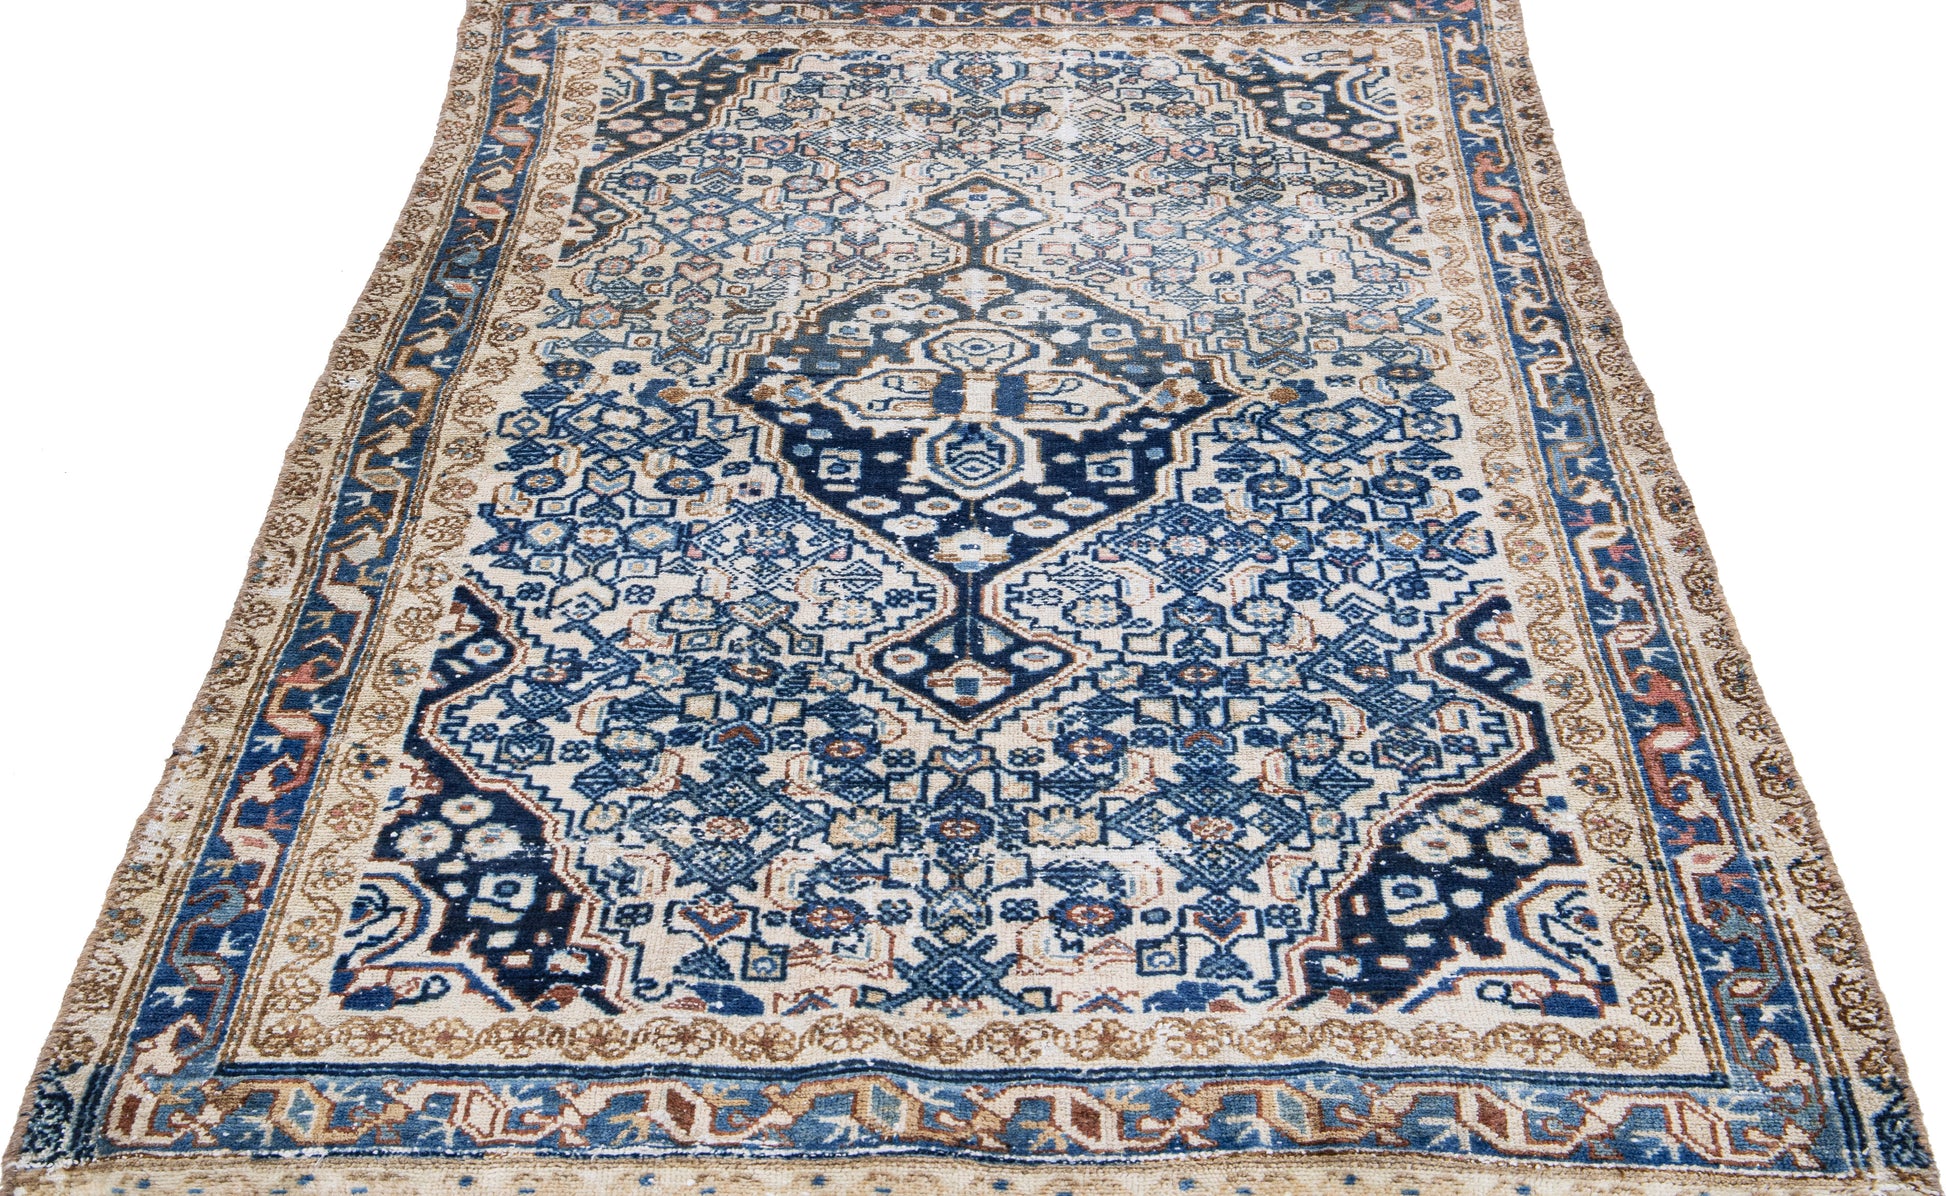 Handmade Persian Blue Wool Rug - 4' x 6'5"